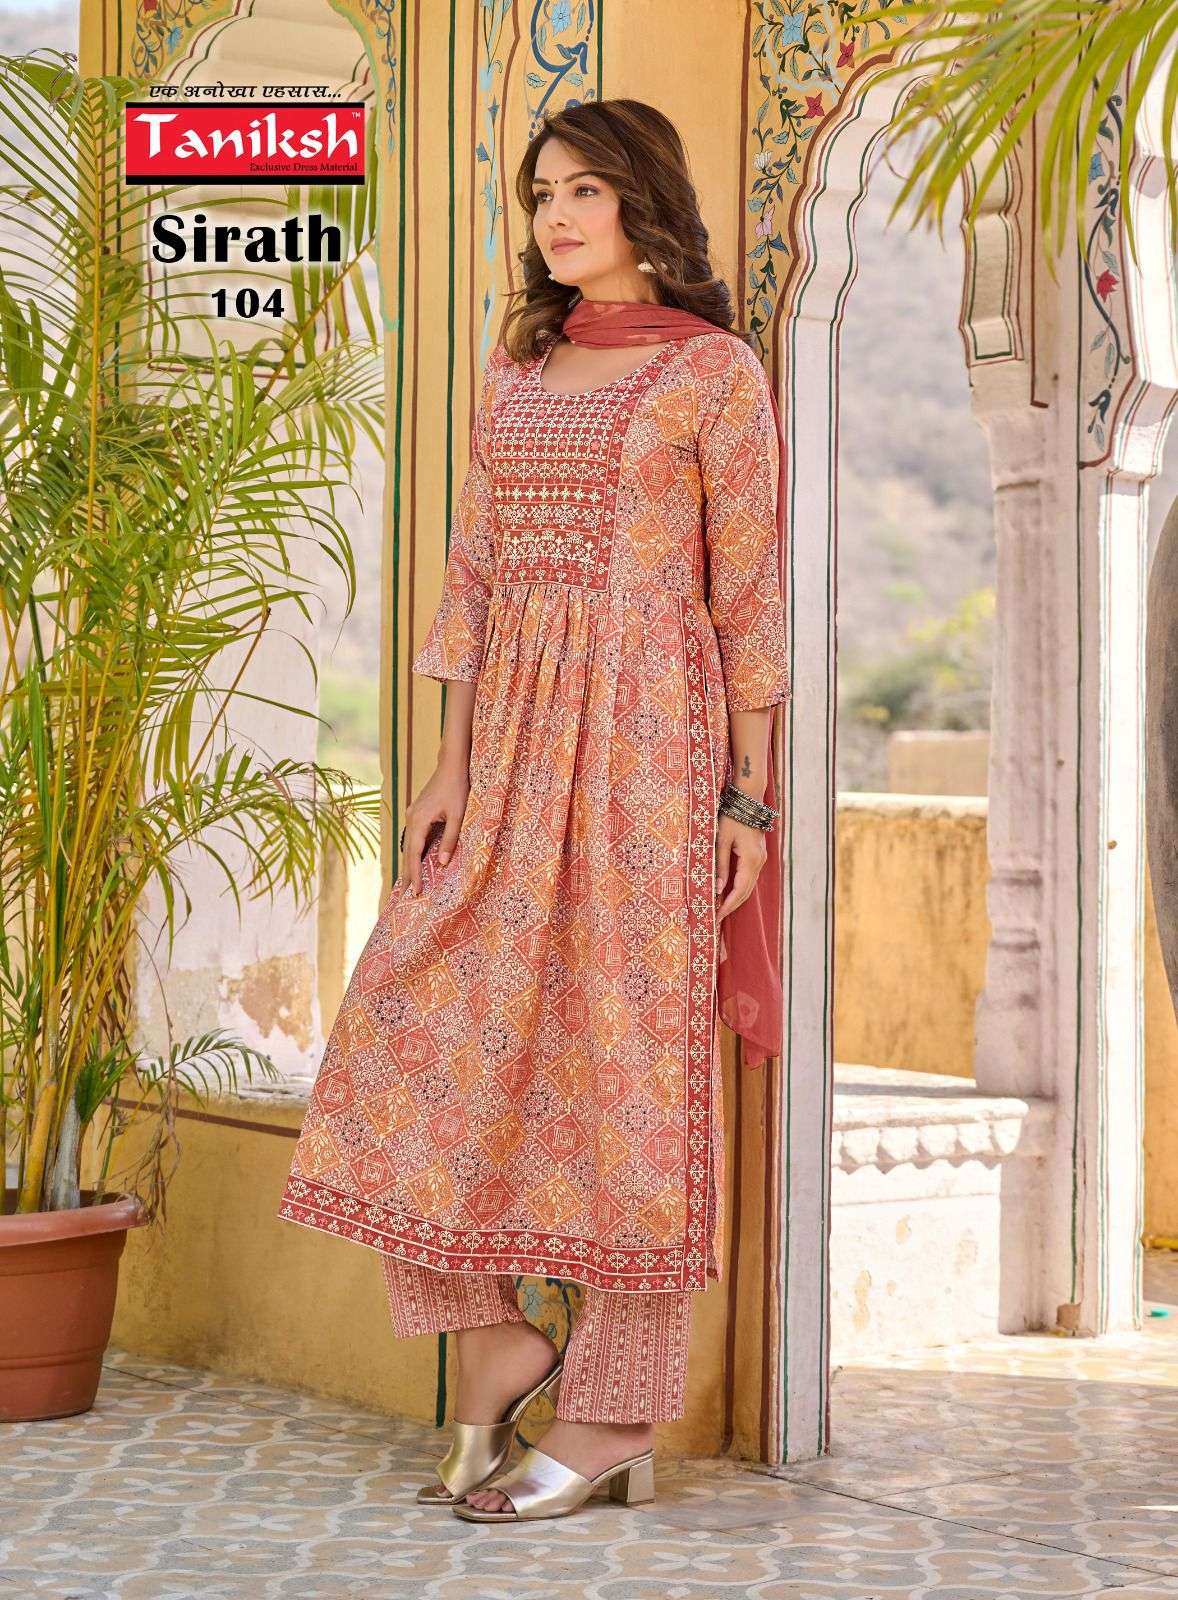 taniksh sirath 101-108 series trendy designer salwar suits catalogue online supplier surat